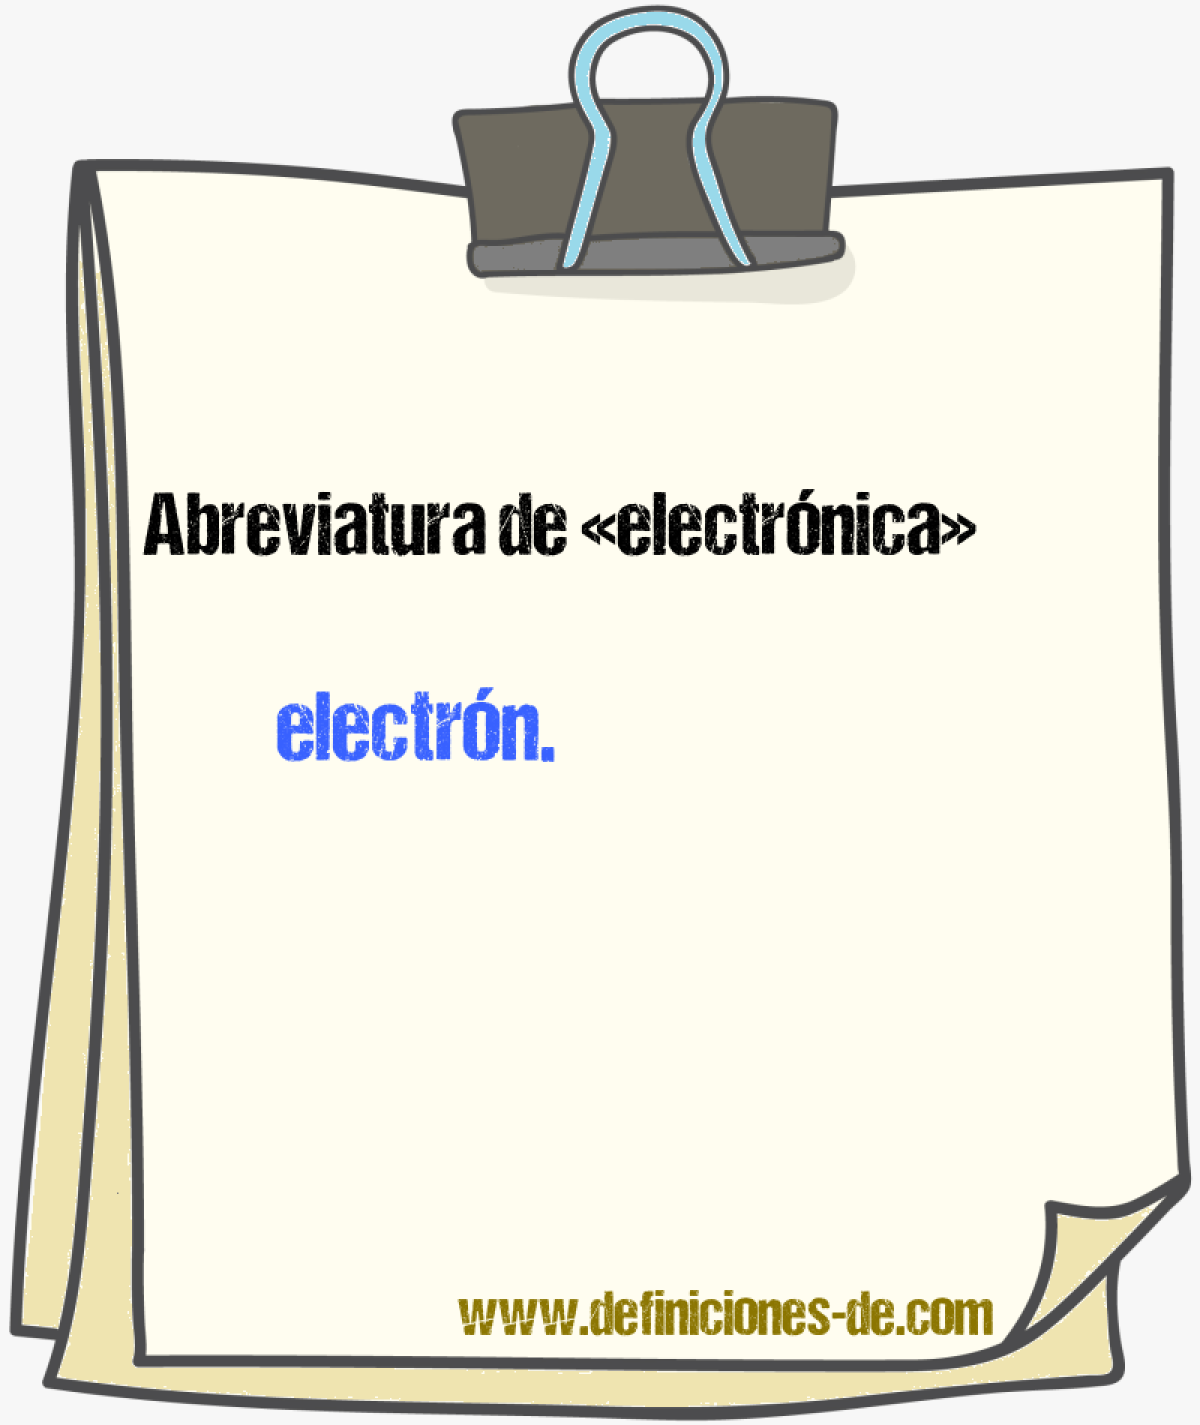 Abreviaturas de electrnica